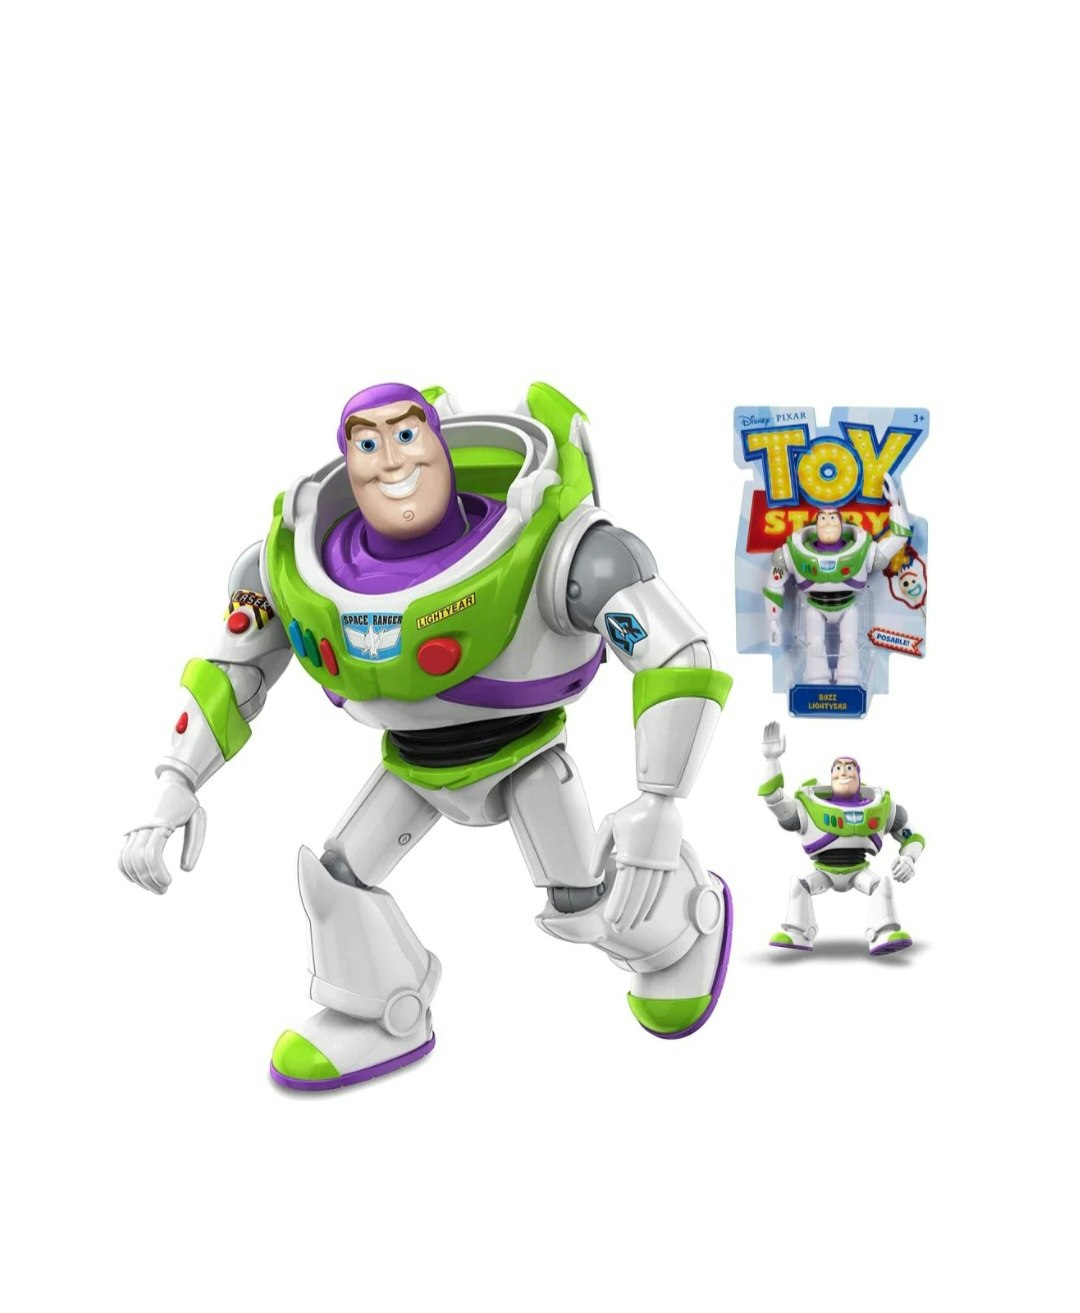 Disney Pixar Toy Story Docka Buzz Lightyear en rymdhjälte i rymddräkt